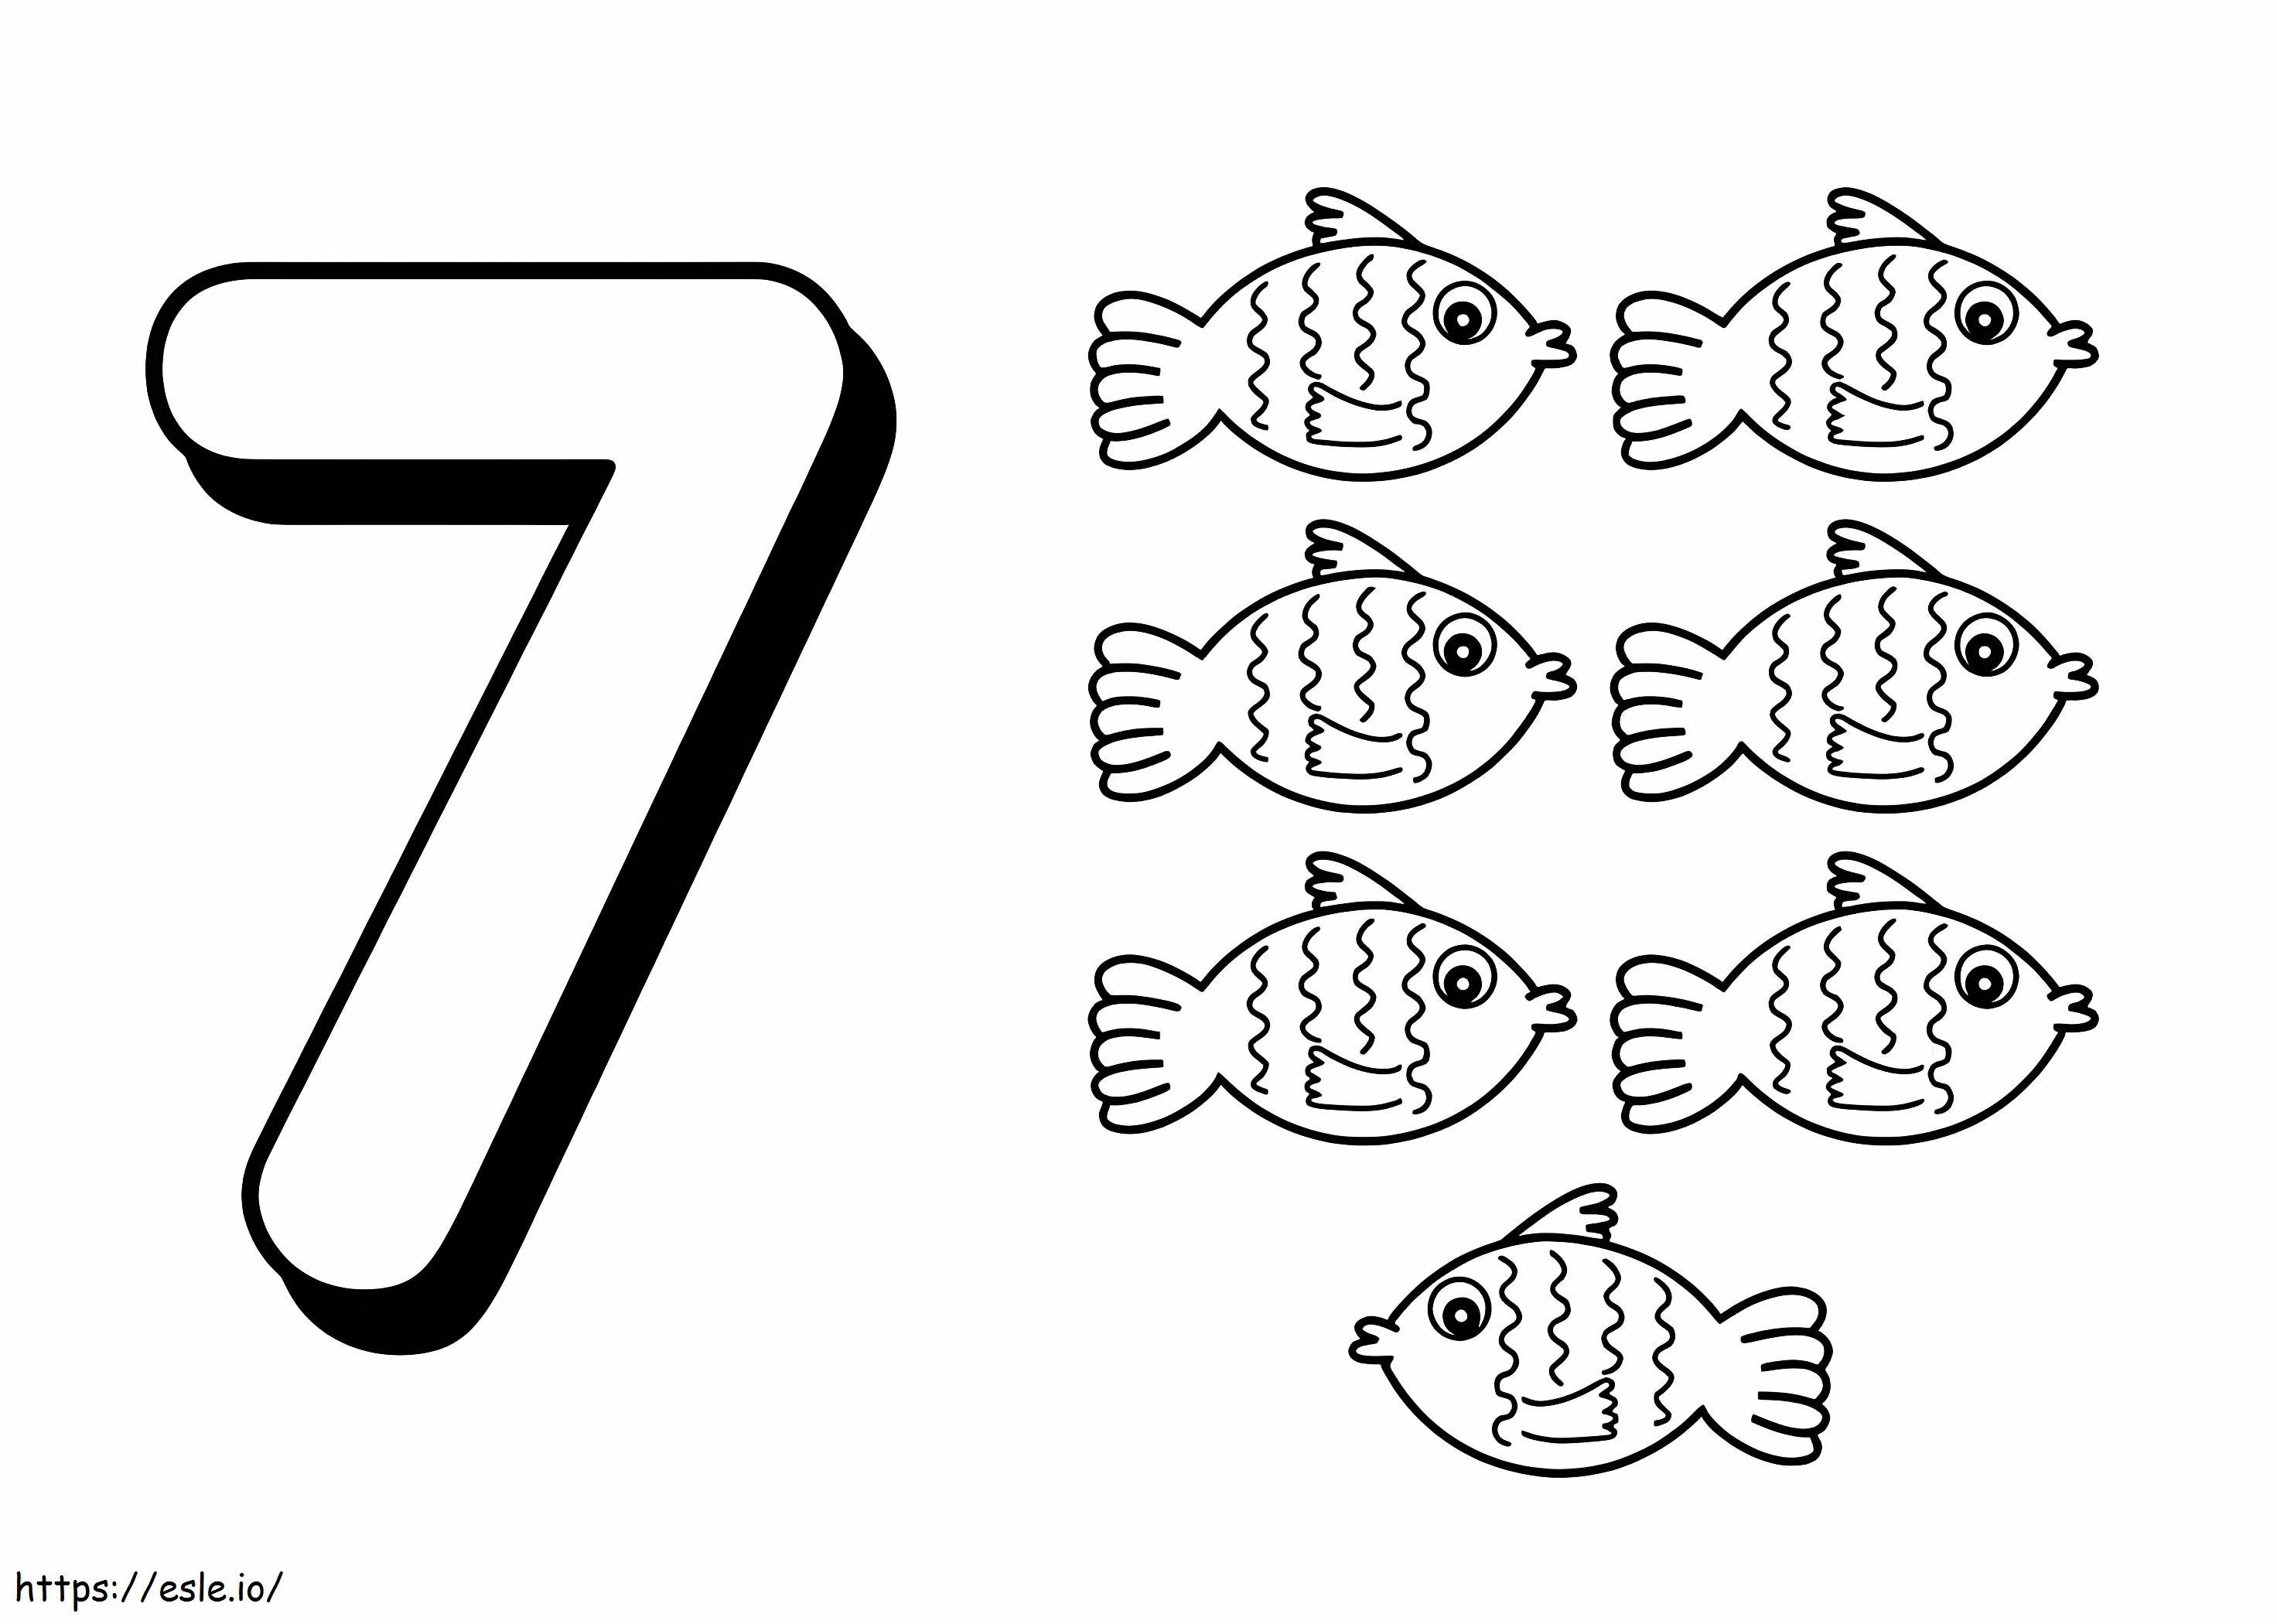 Vis nummer 7 en 7 kleurplaat kleurplaat